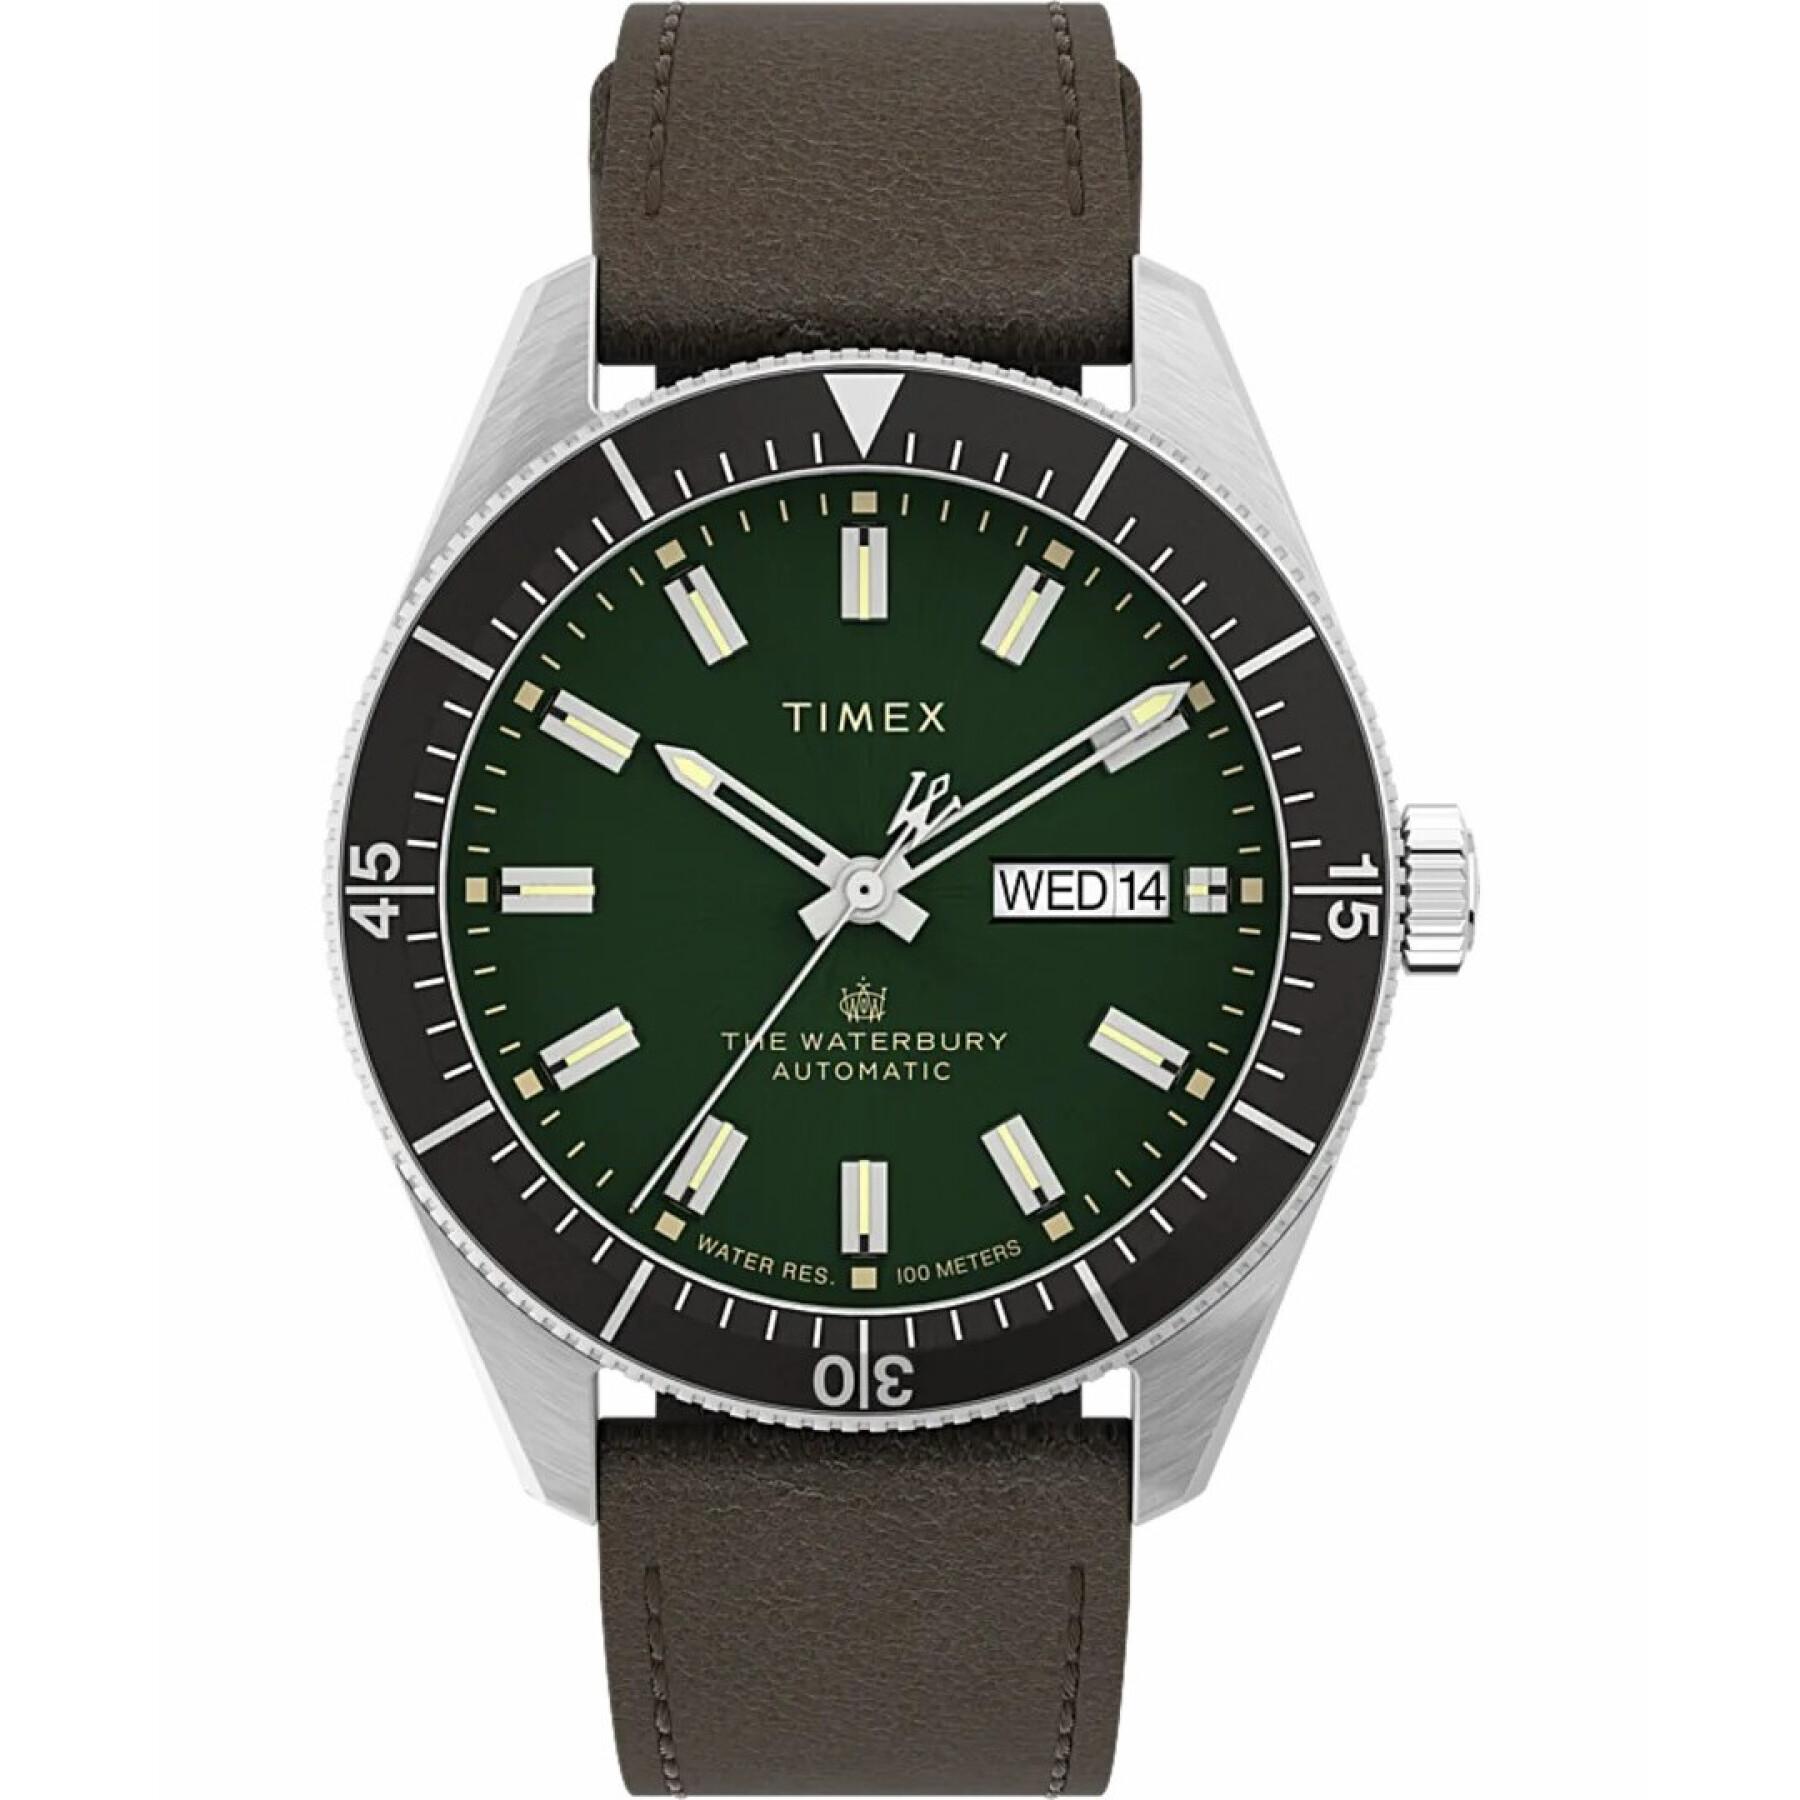 Horloge Timex M79 Automatic